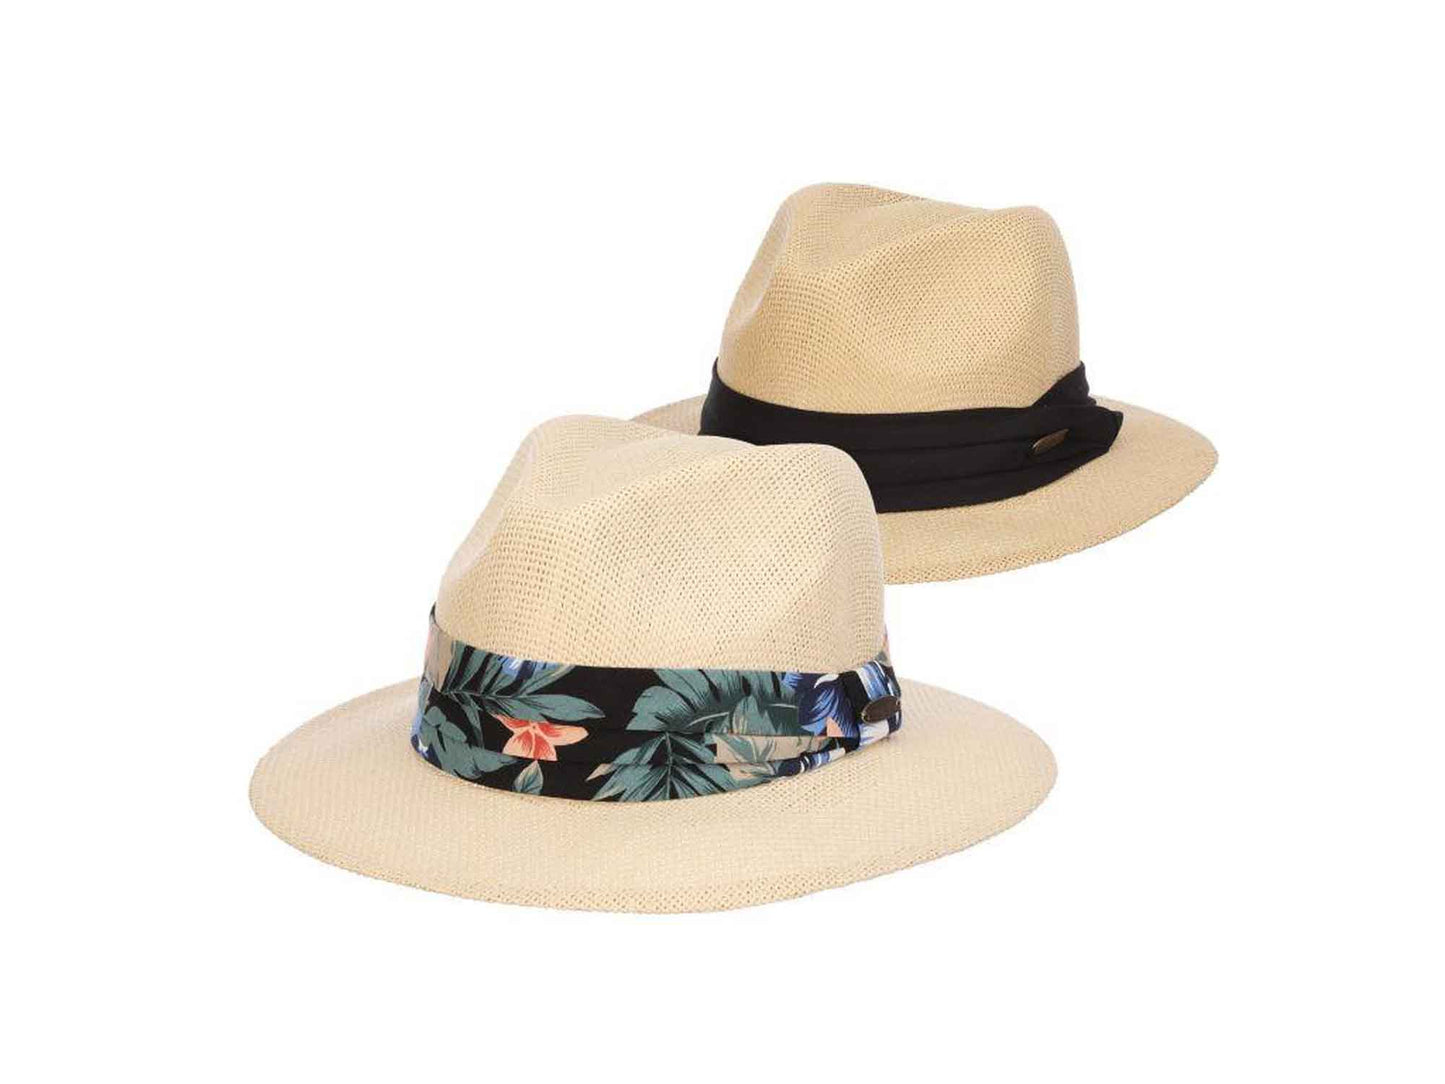 Panama Jack "MACK" Matte Toyo Safari Hat, Style#PJ203 - NEW!